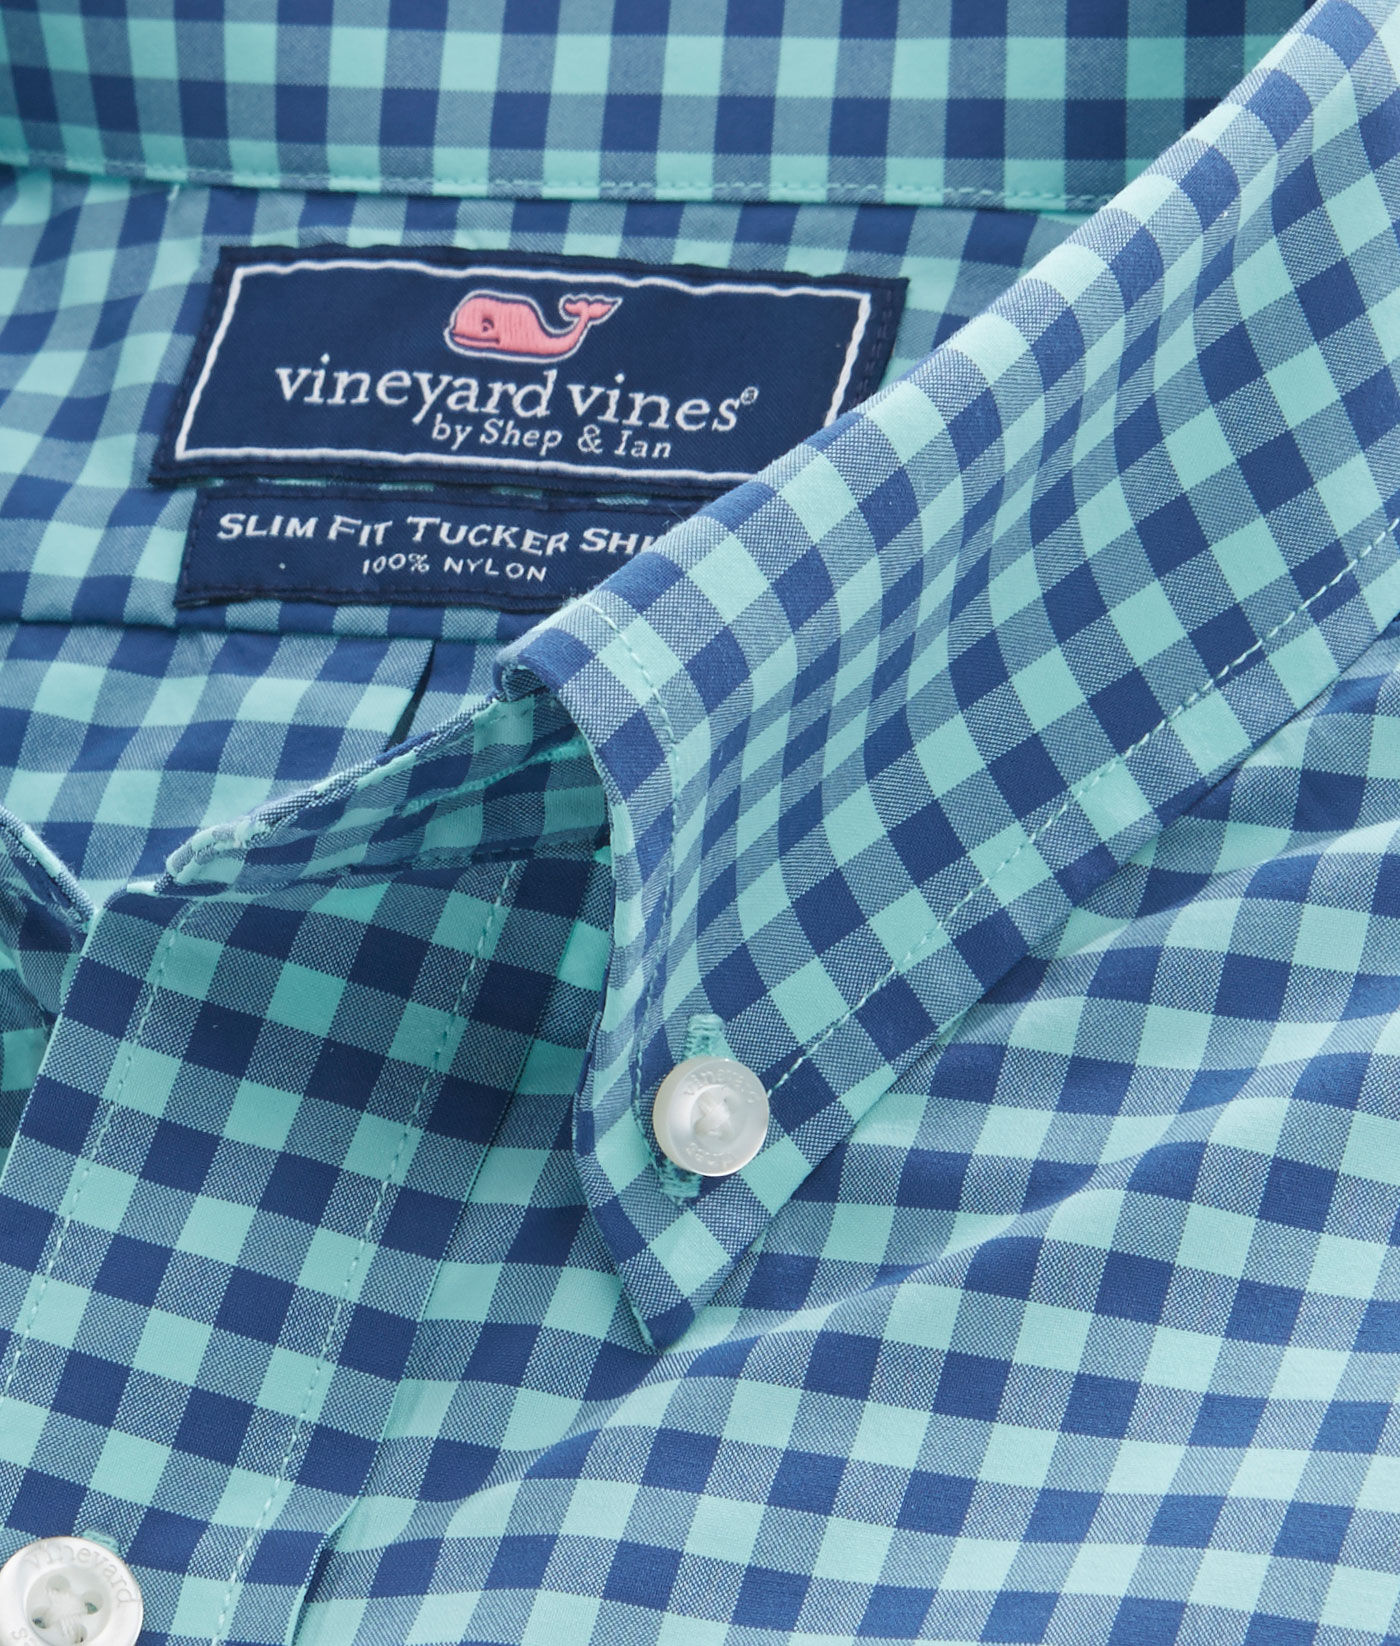 vineyard vines slim fit tucker shirt